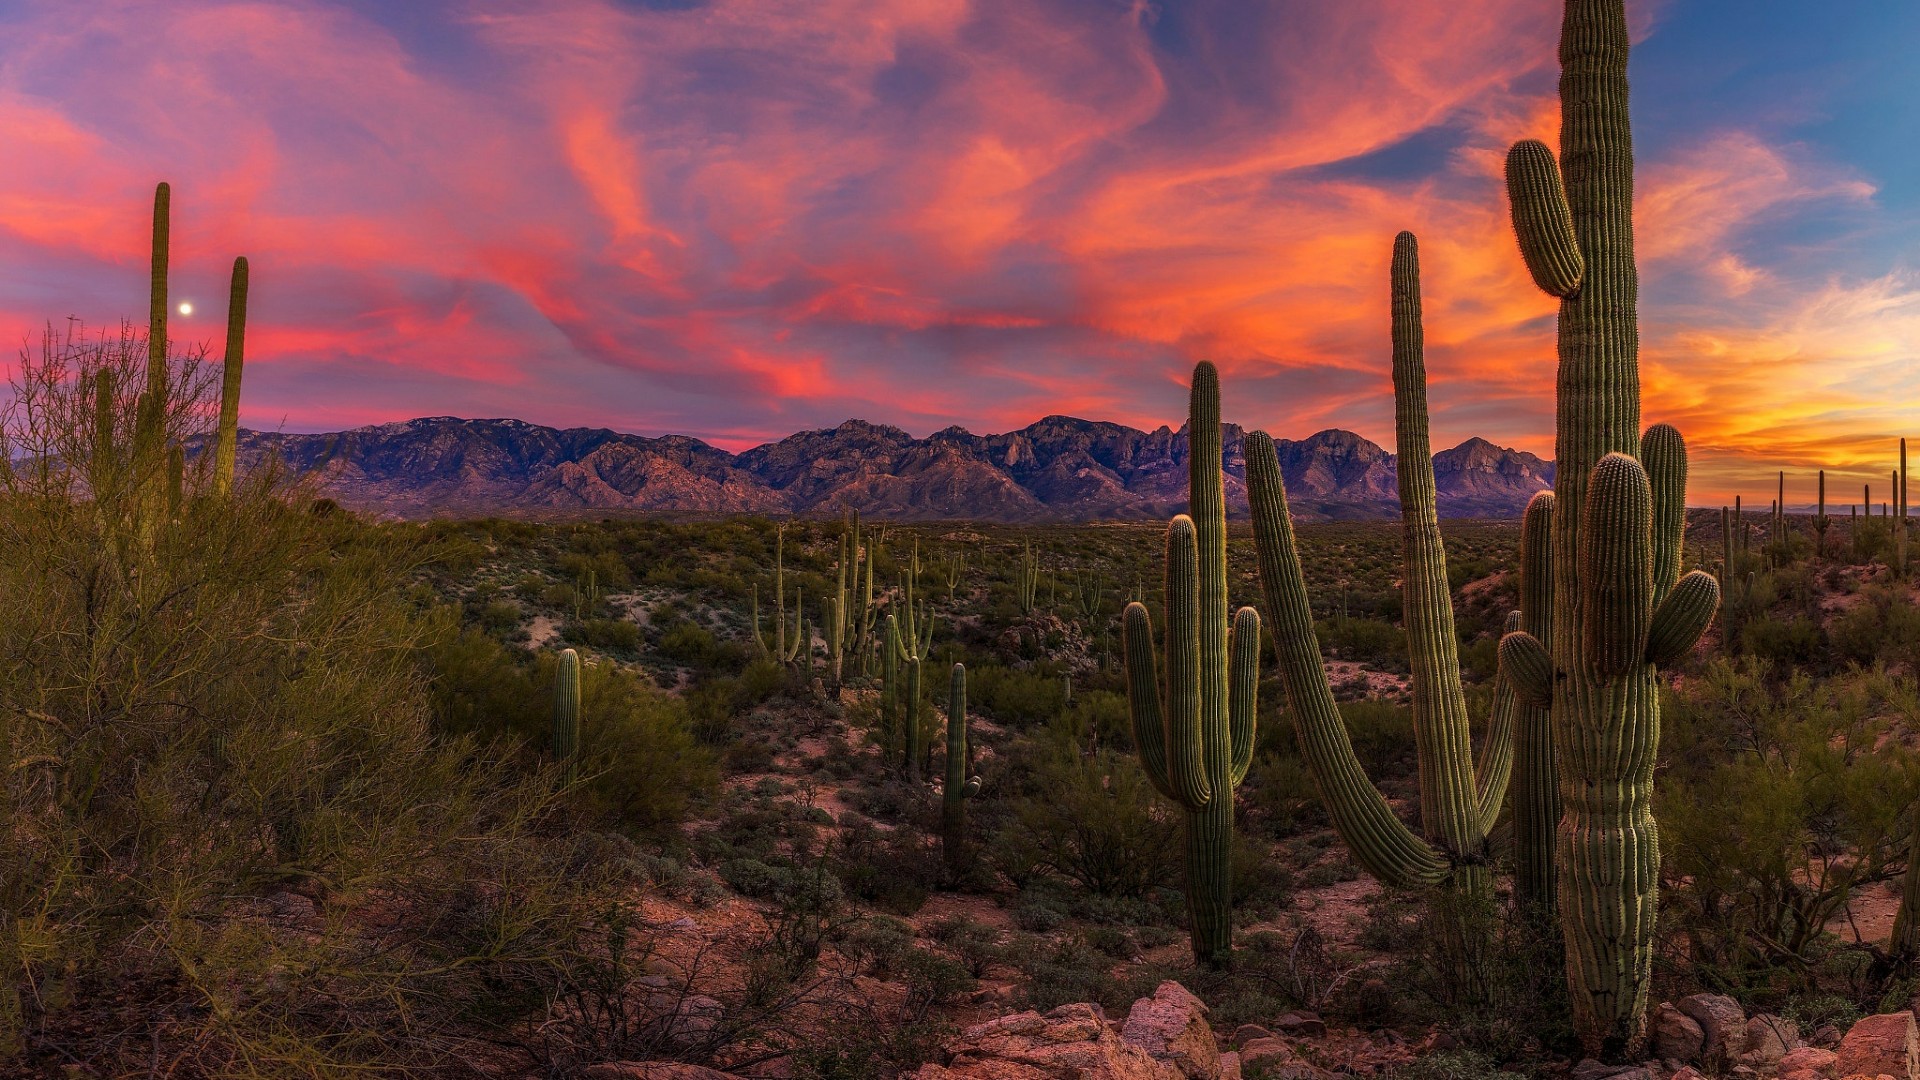 Saguaro Cactus in the Sonoran Desert at sunset - Arizona - backiee